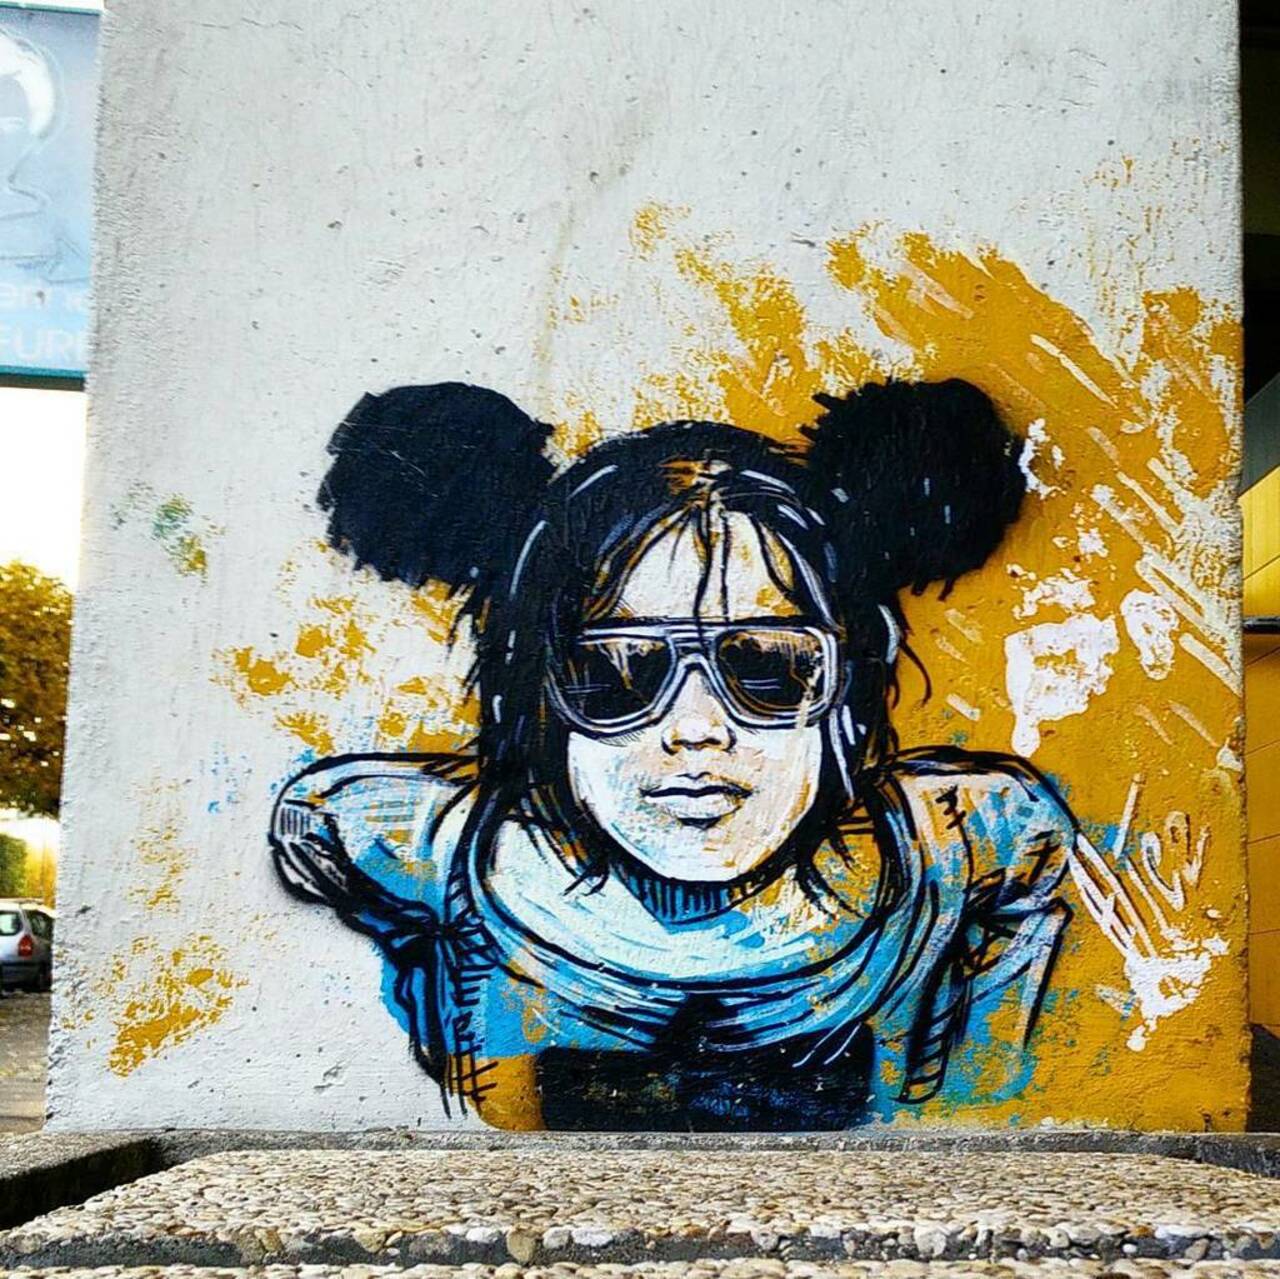 By @alicepasquini #alicepasquini 
#streetart #streetartparis #parisstreetart #parisgraffiti #graffiti #graffitiart … https://t.co/ajBViCiolB